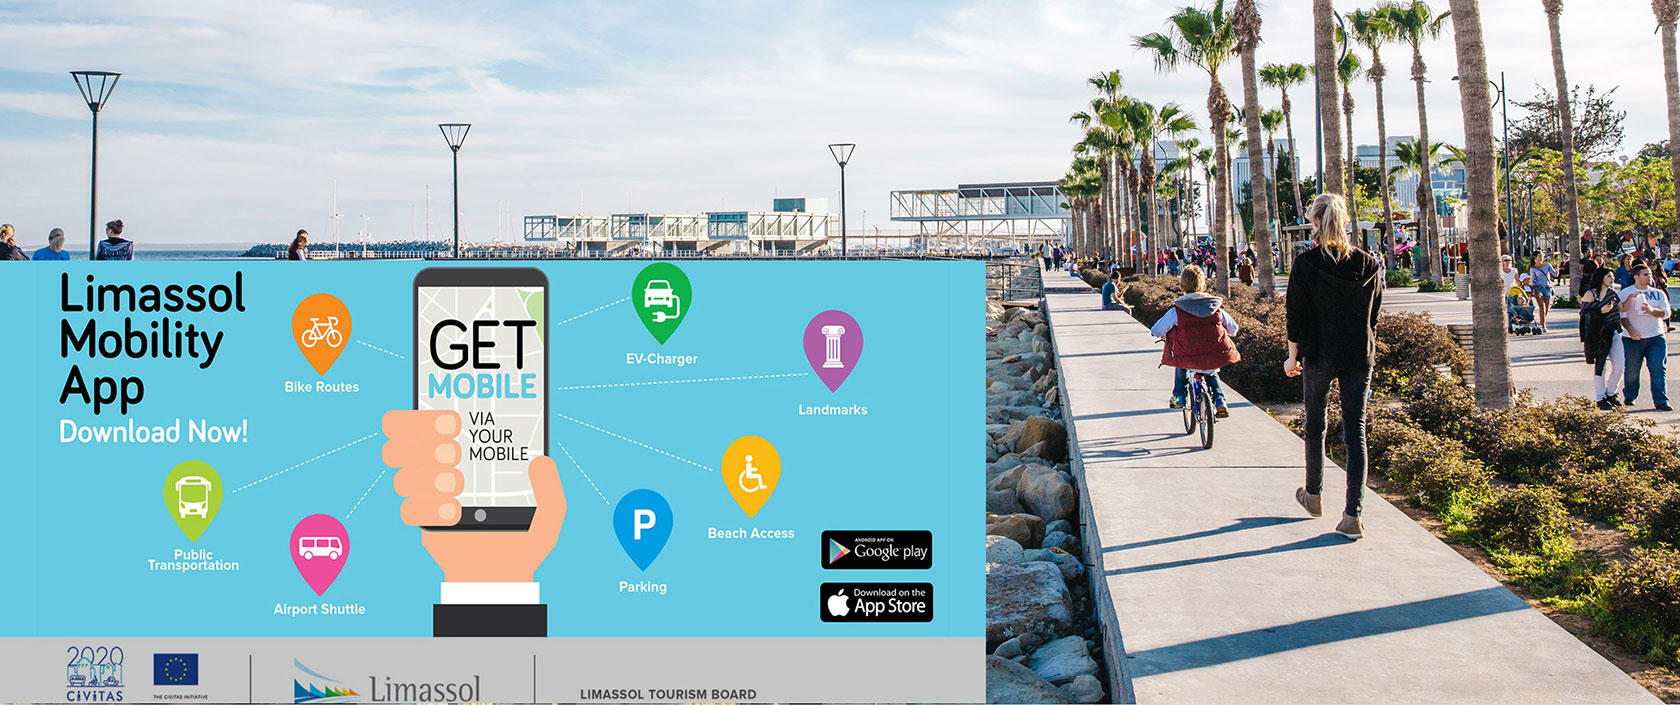 Limassol Mobility App